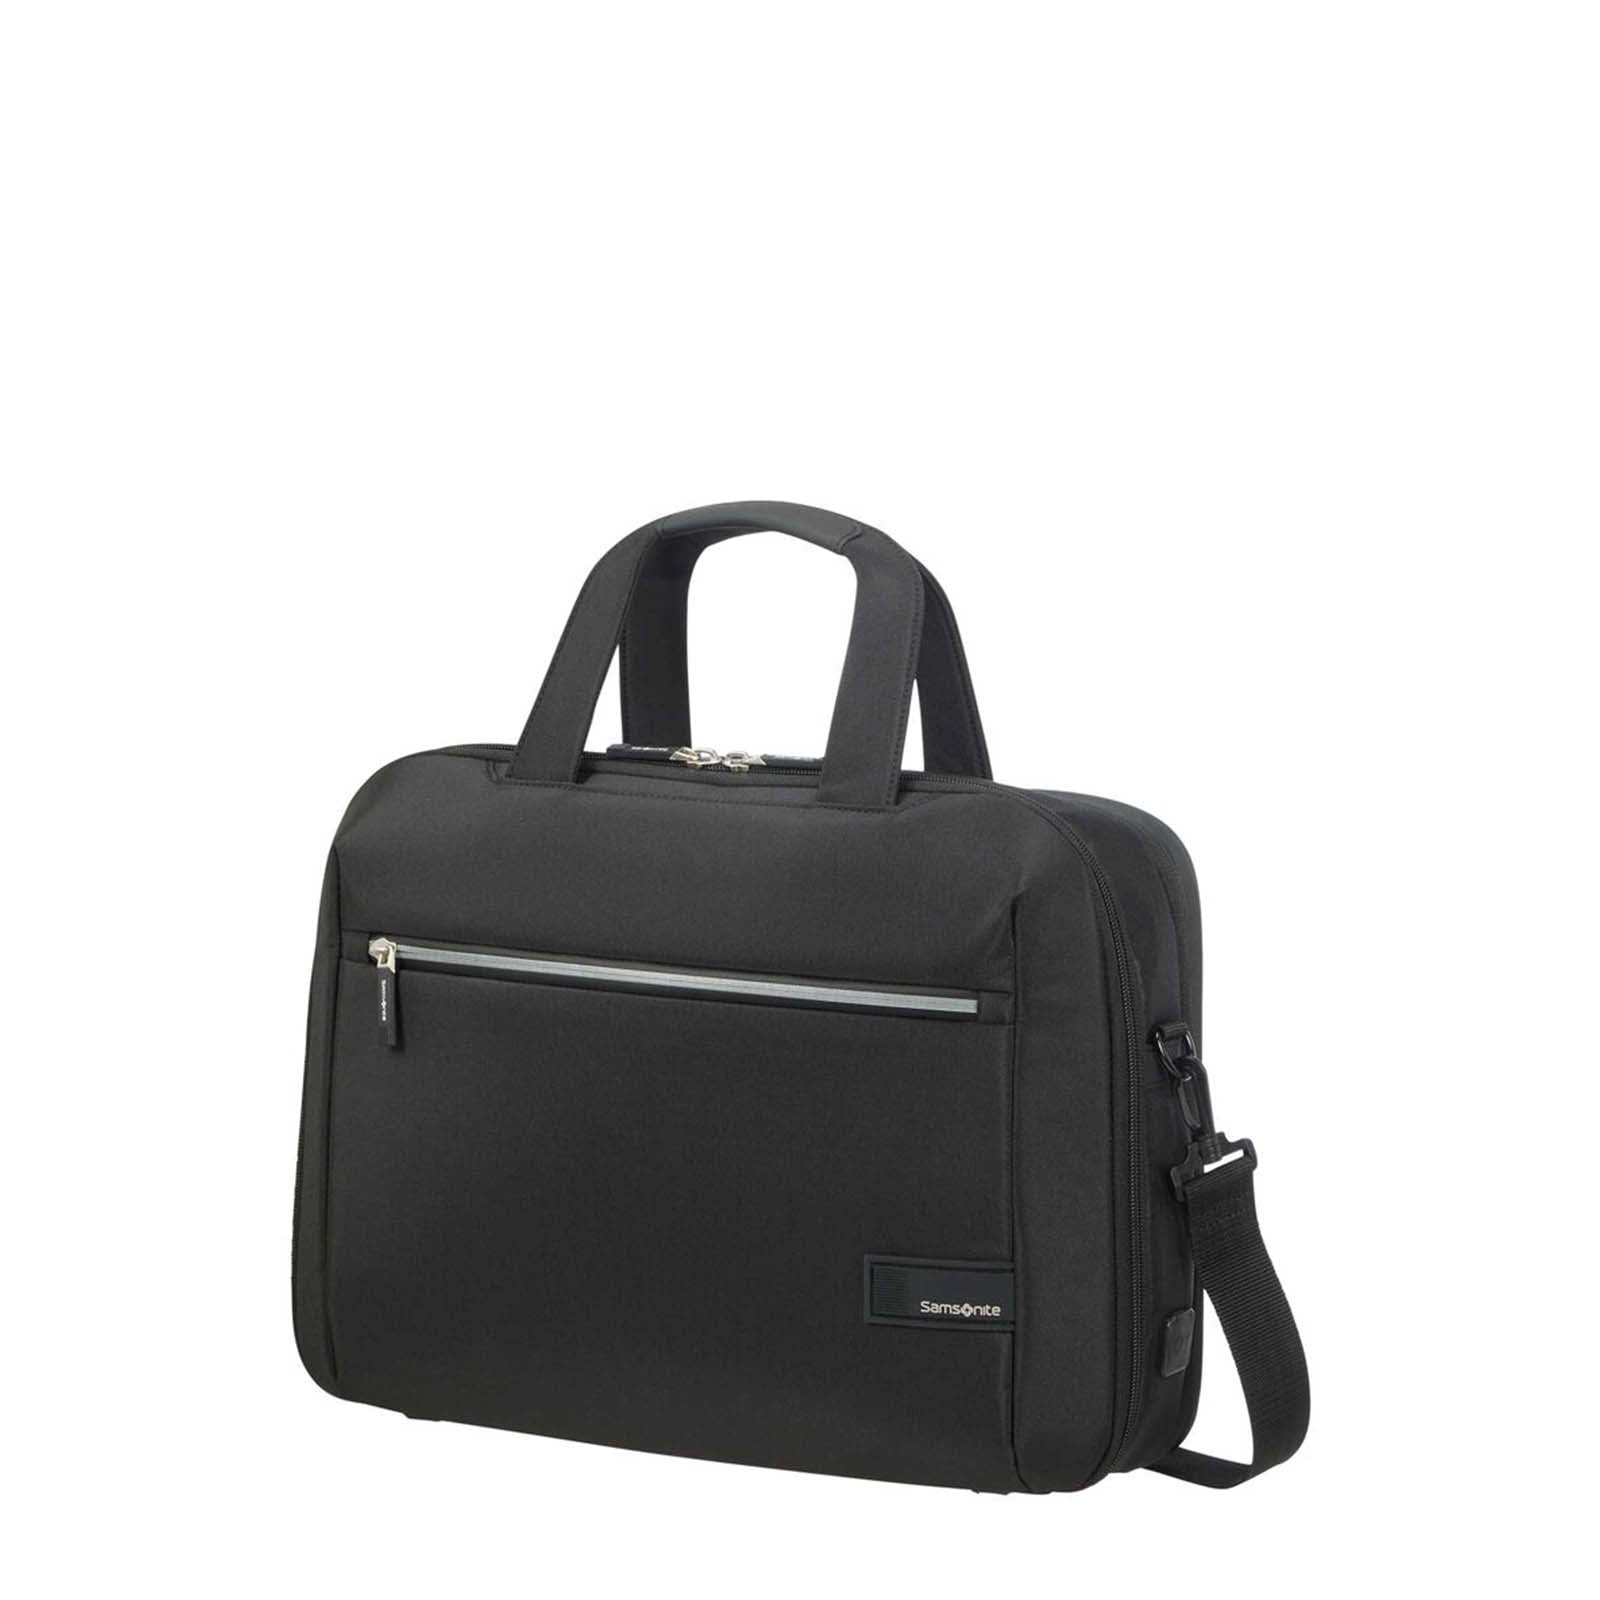 Samsonite Litepoint 15.6 Inch Laptop Bailhandle Briefcase Black